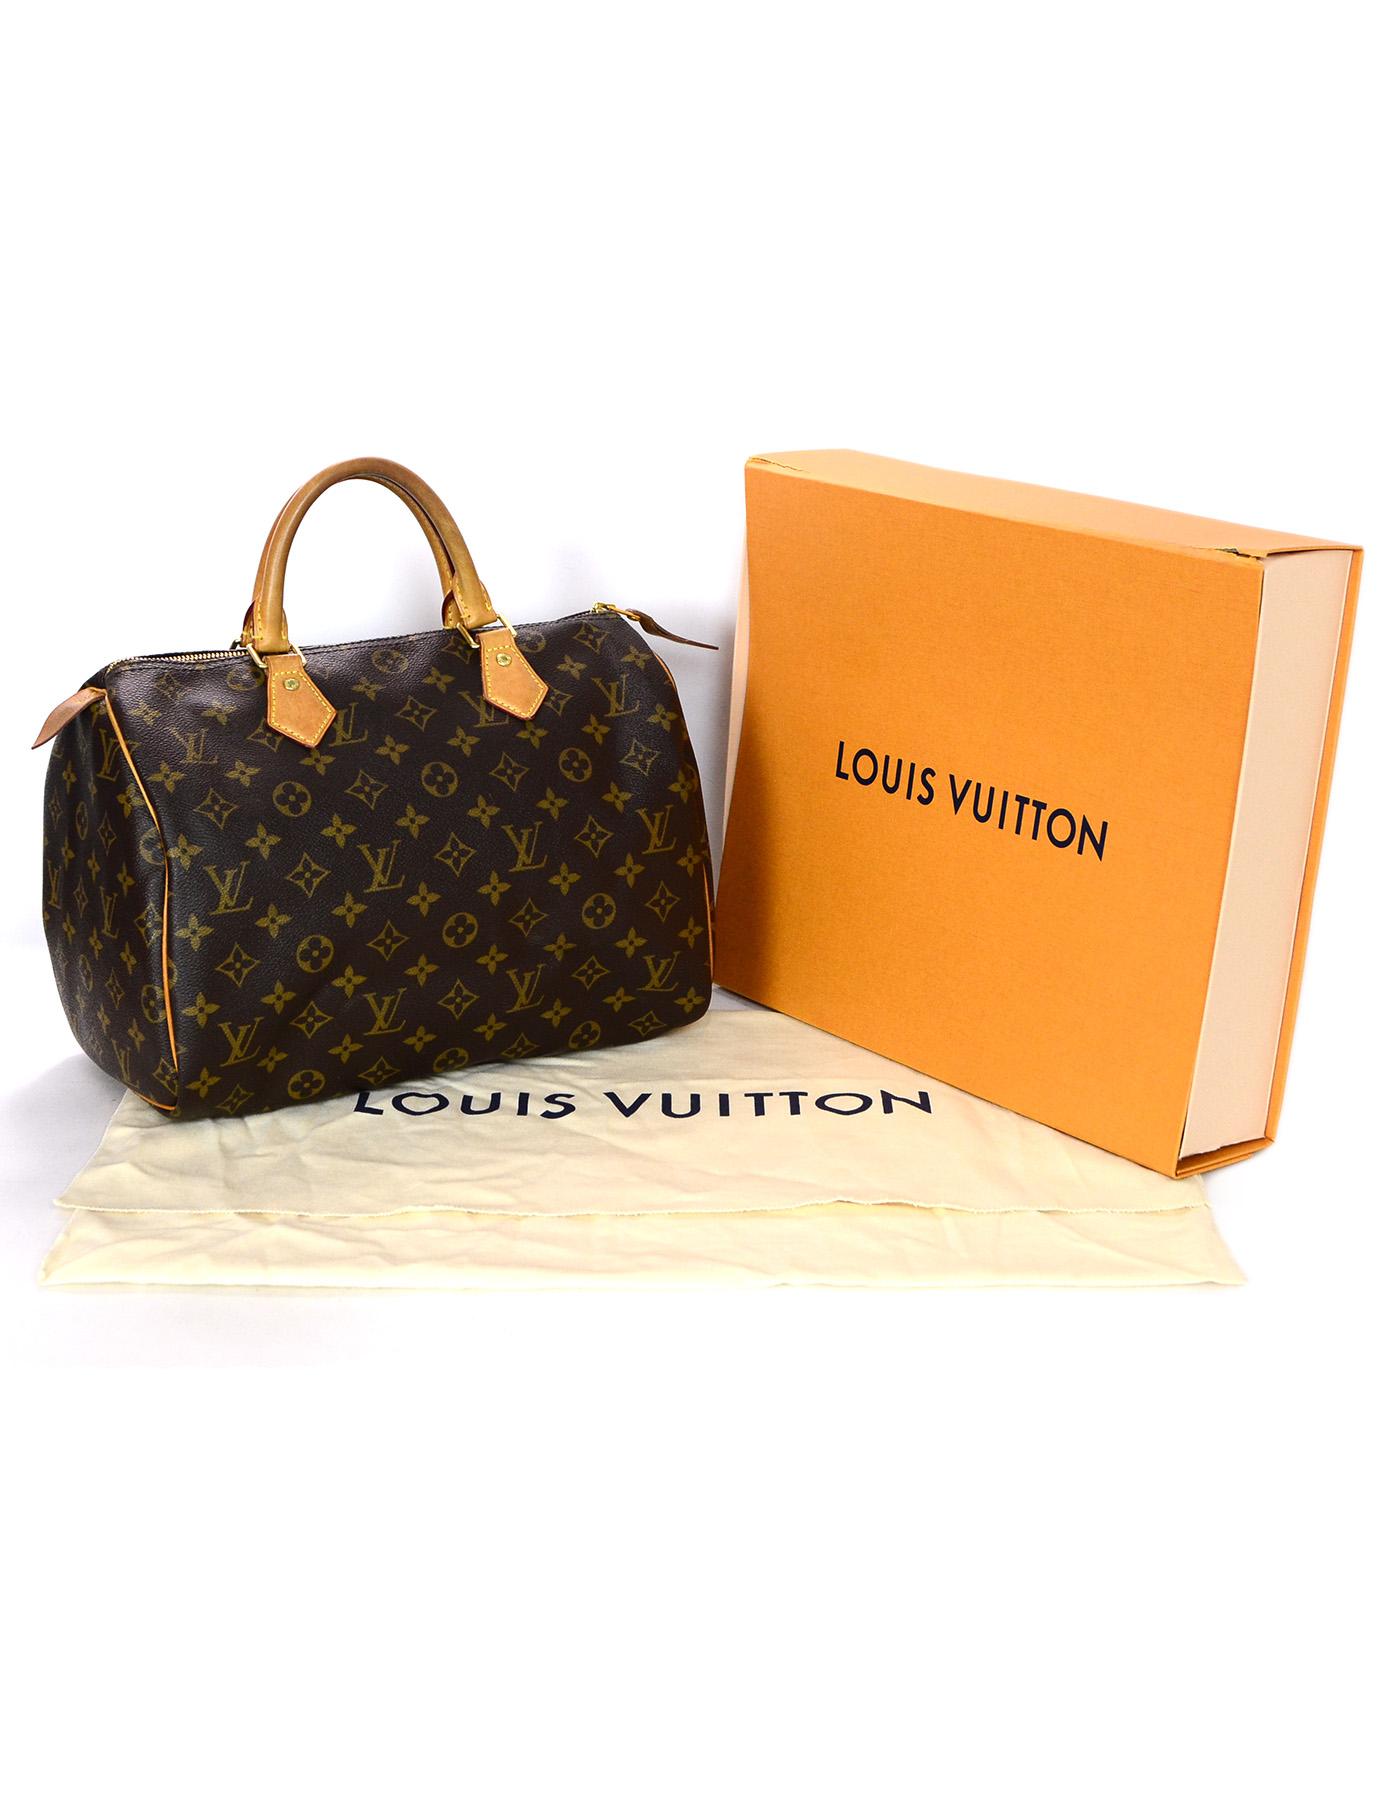 Louis Vuitton LV Monogram Speedy 30 Bag w/ Box and DB 3